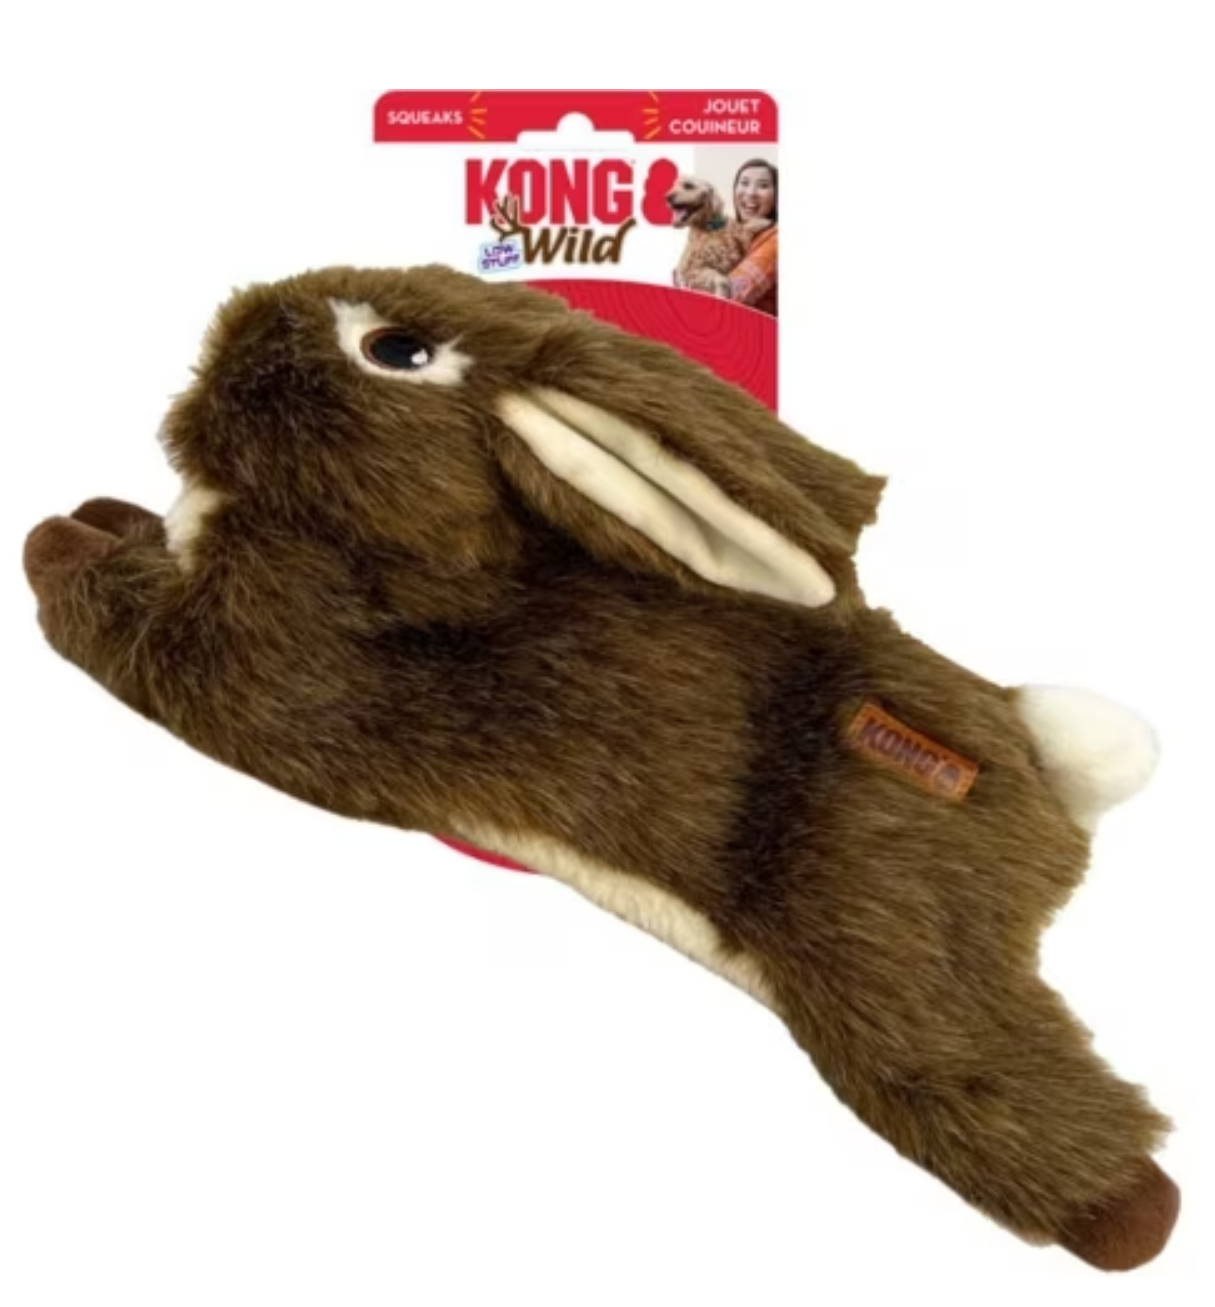 Kong Low Stuff Wild Dog Toy - Rabbit